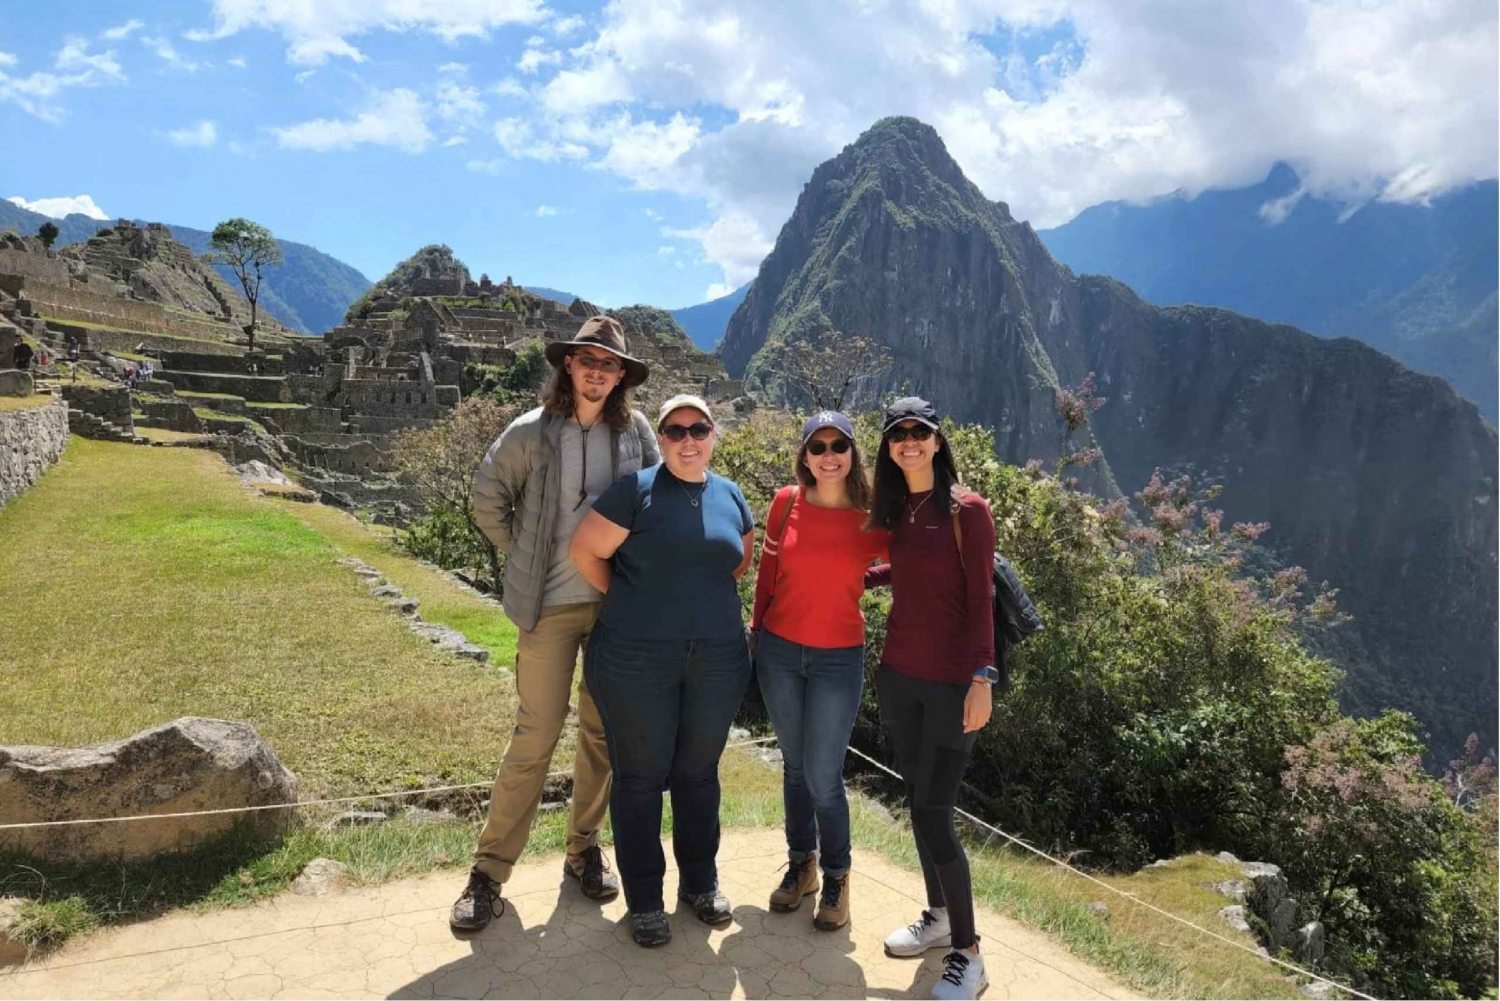 Machu Picchu Day Tour Including Entrance Ticket